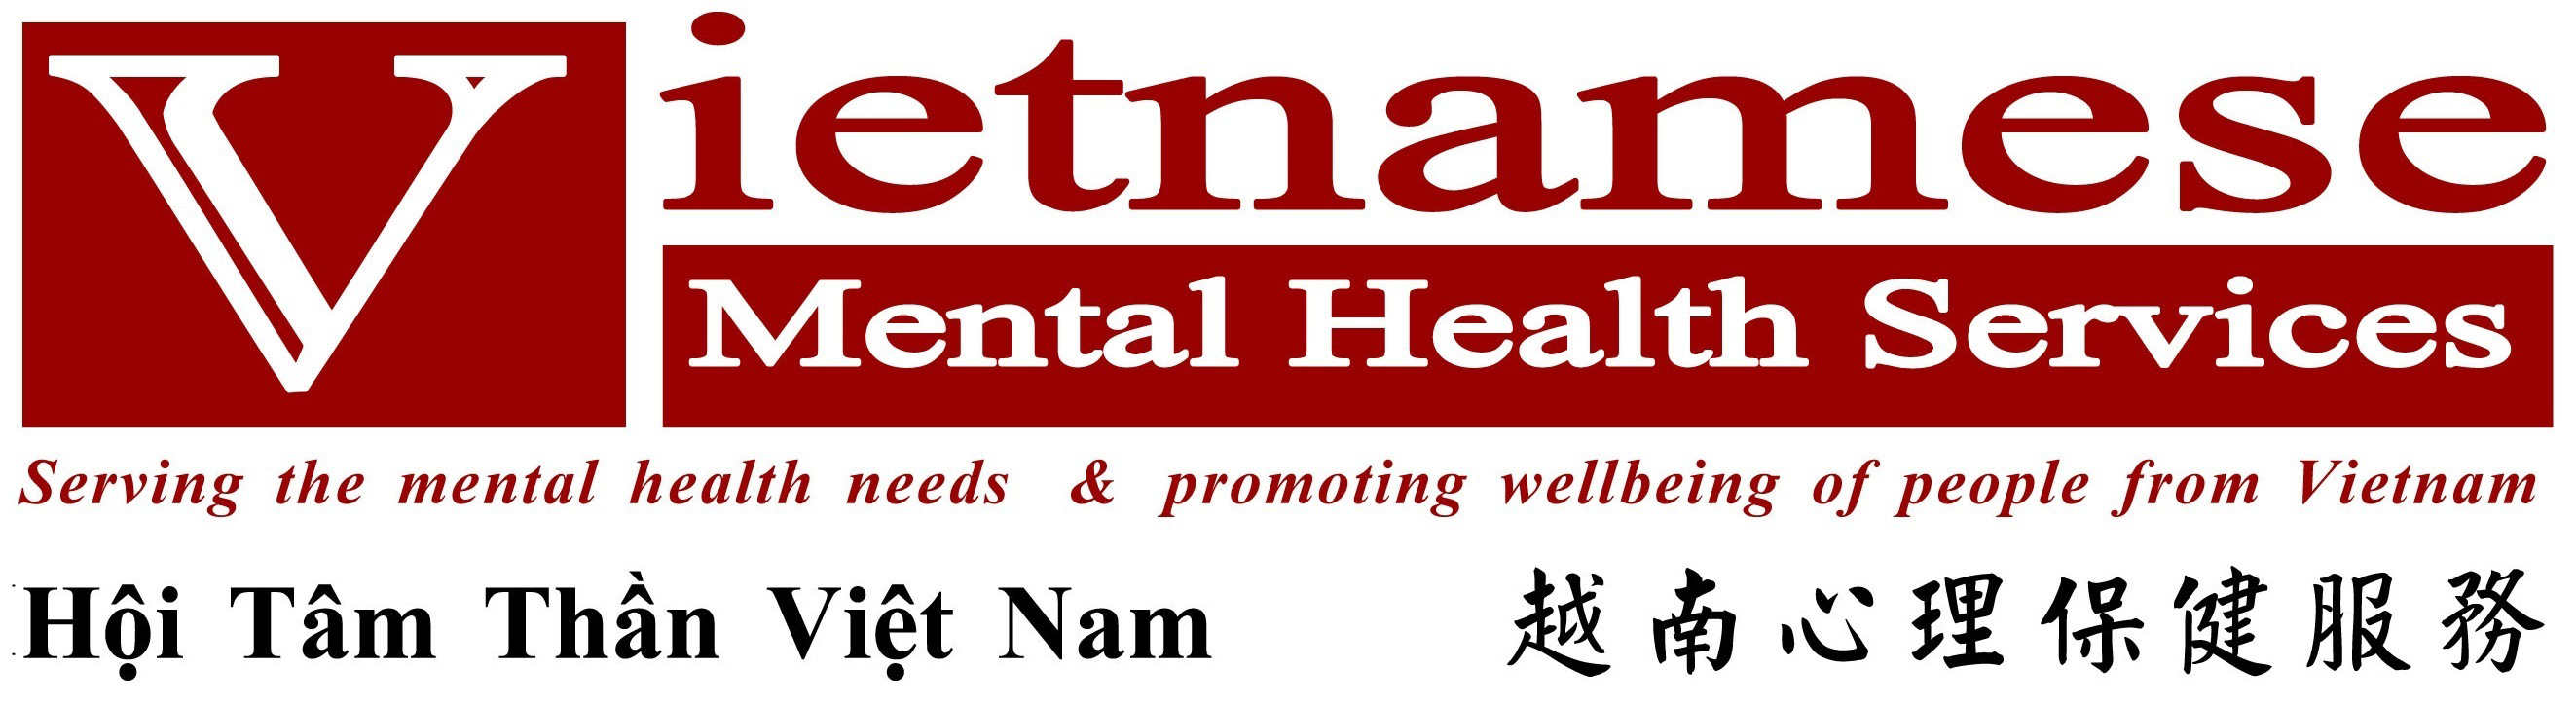 Vietnamese Mental Health Services Logo